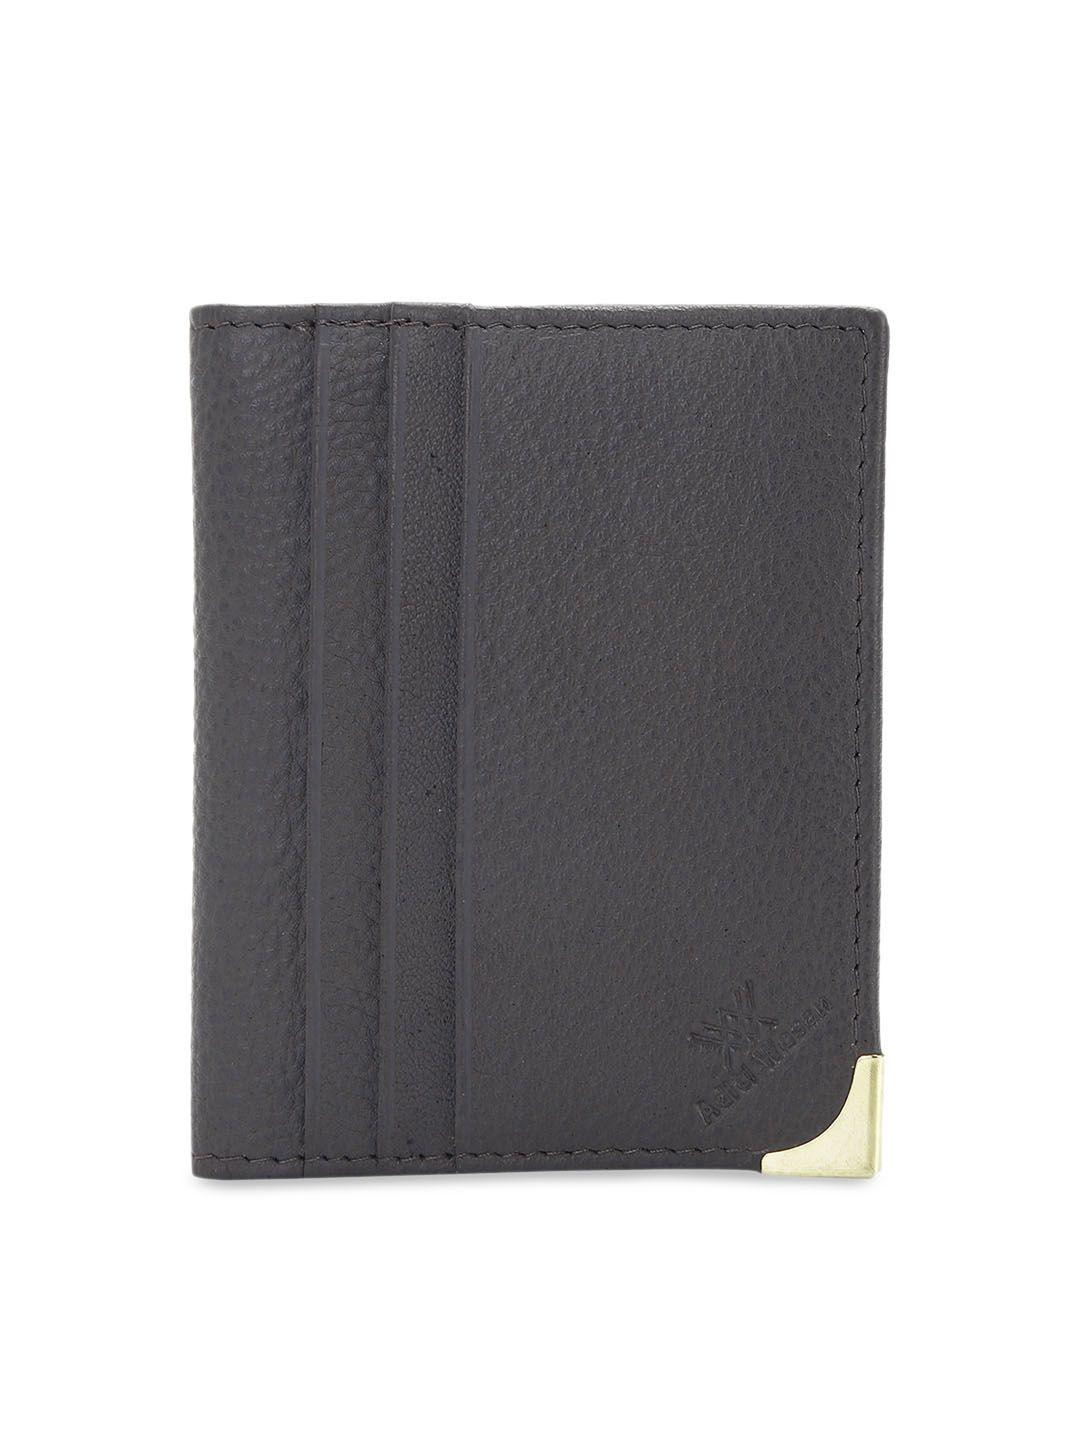 aditi wasan unisex grey solid leather card holder